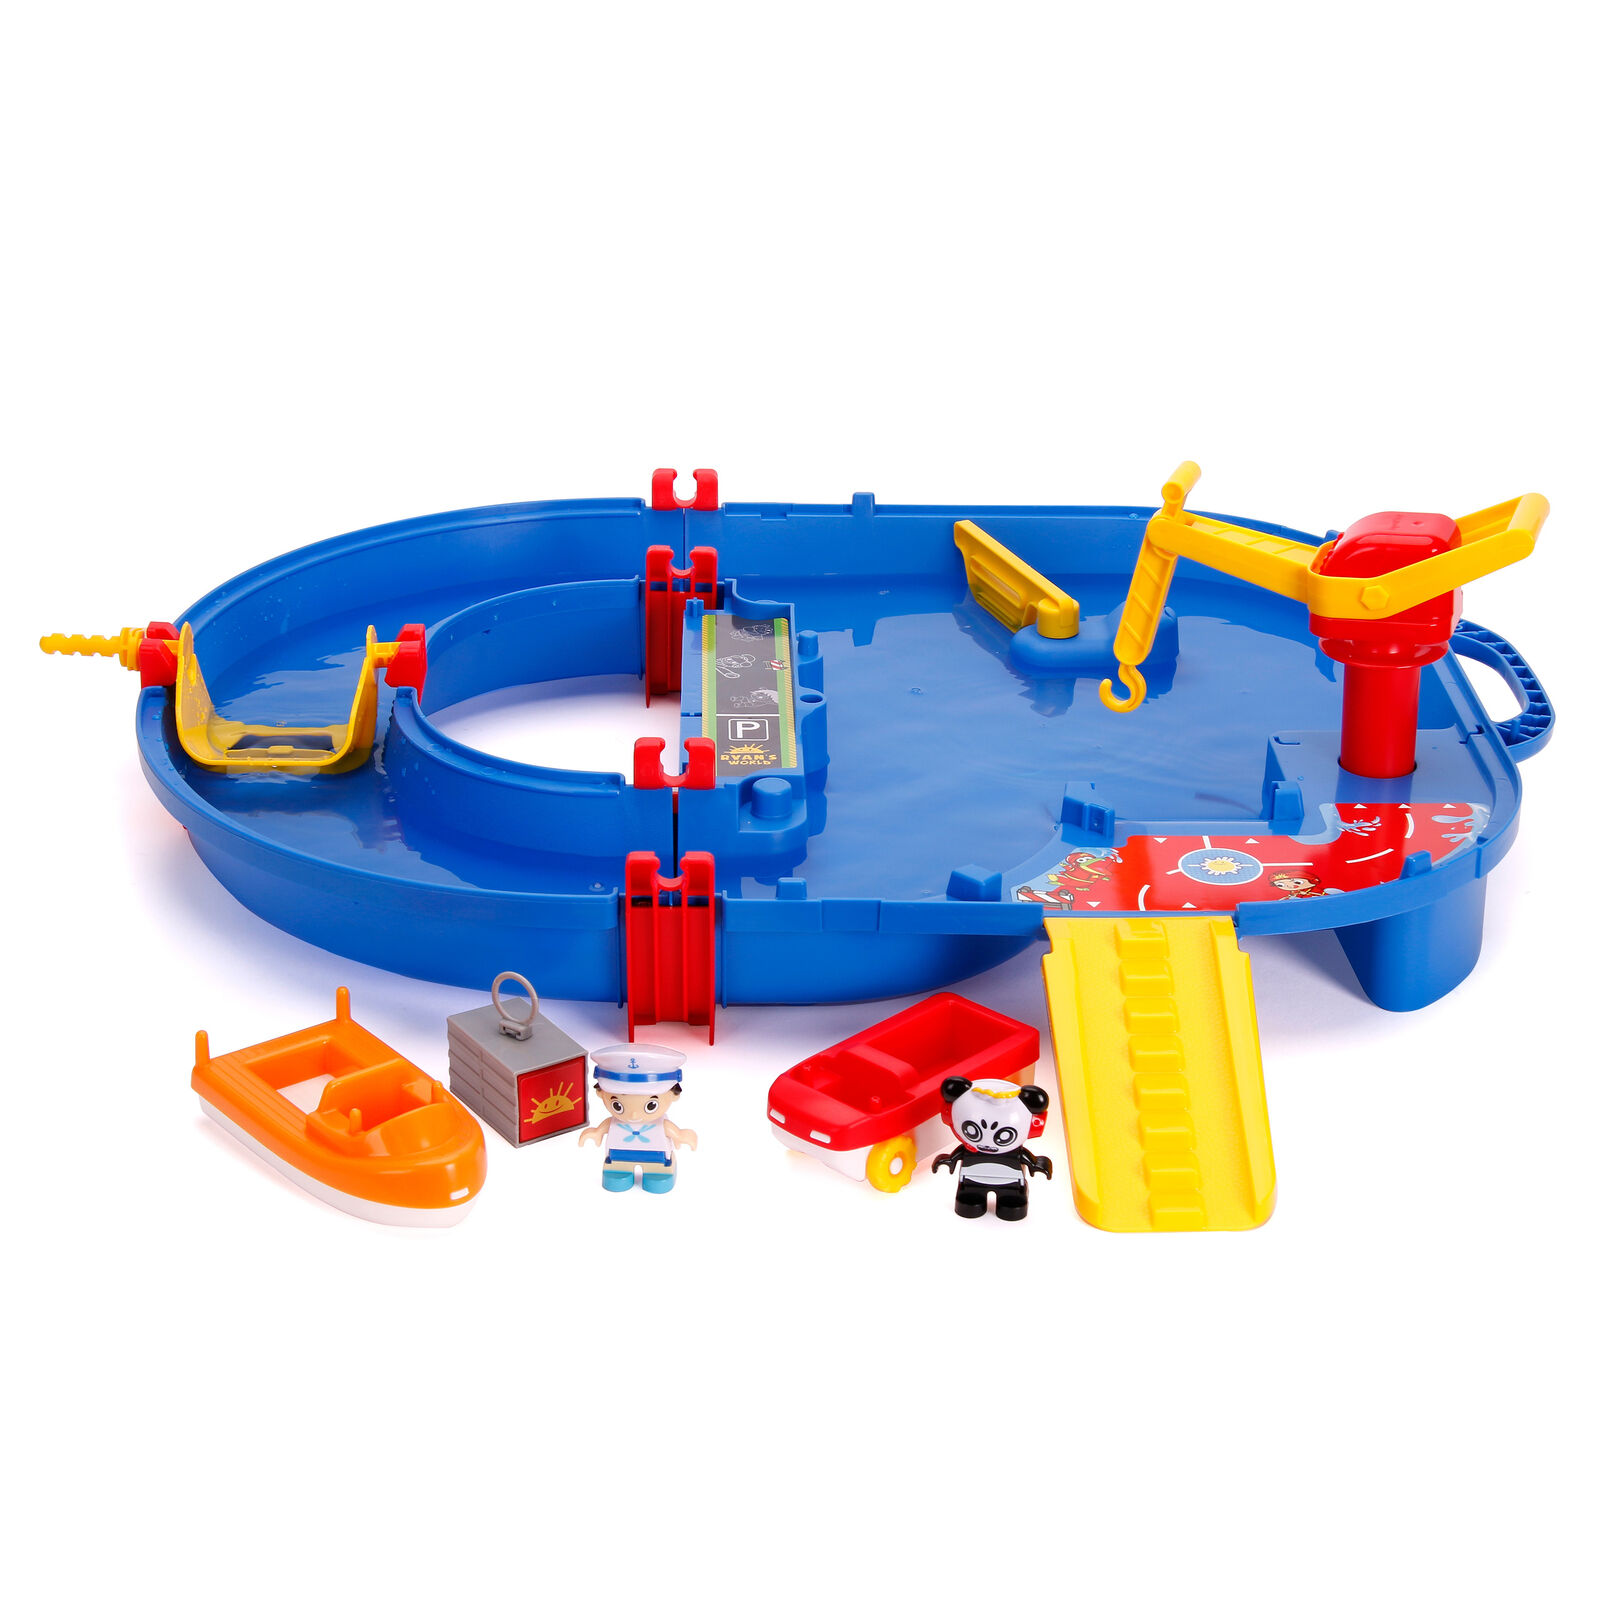 Ryan's World Playset Indoor Outdoor Water Table Splash Fun Kids Backyard Toy New